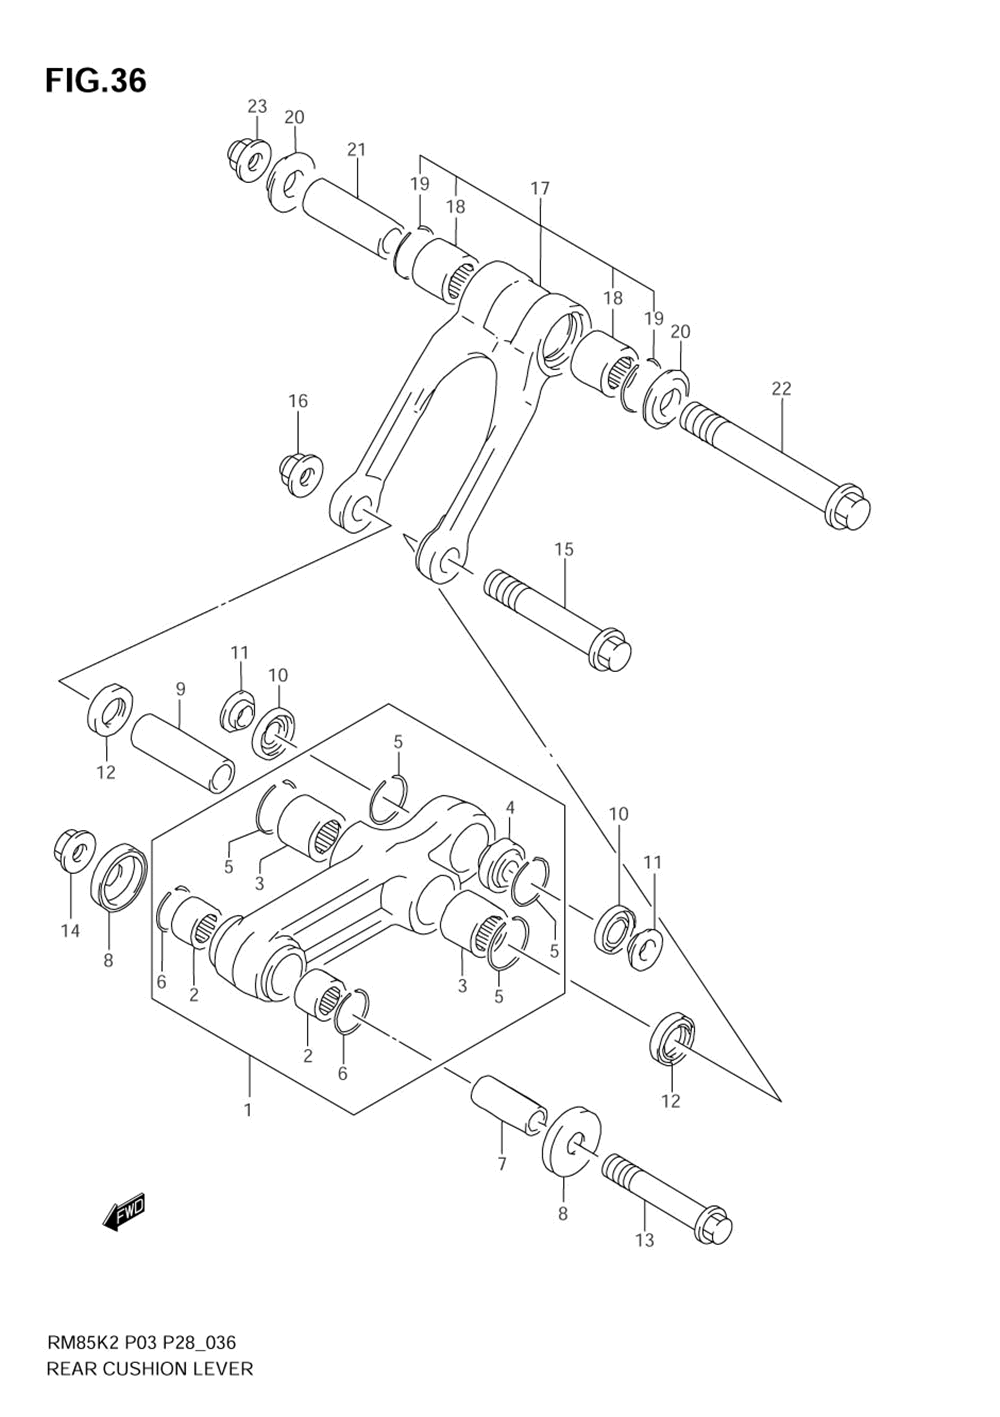 Rear cushion lever (model k2_k3)